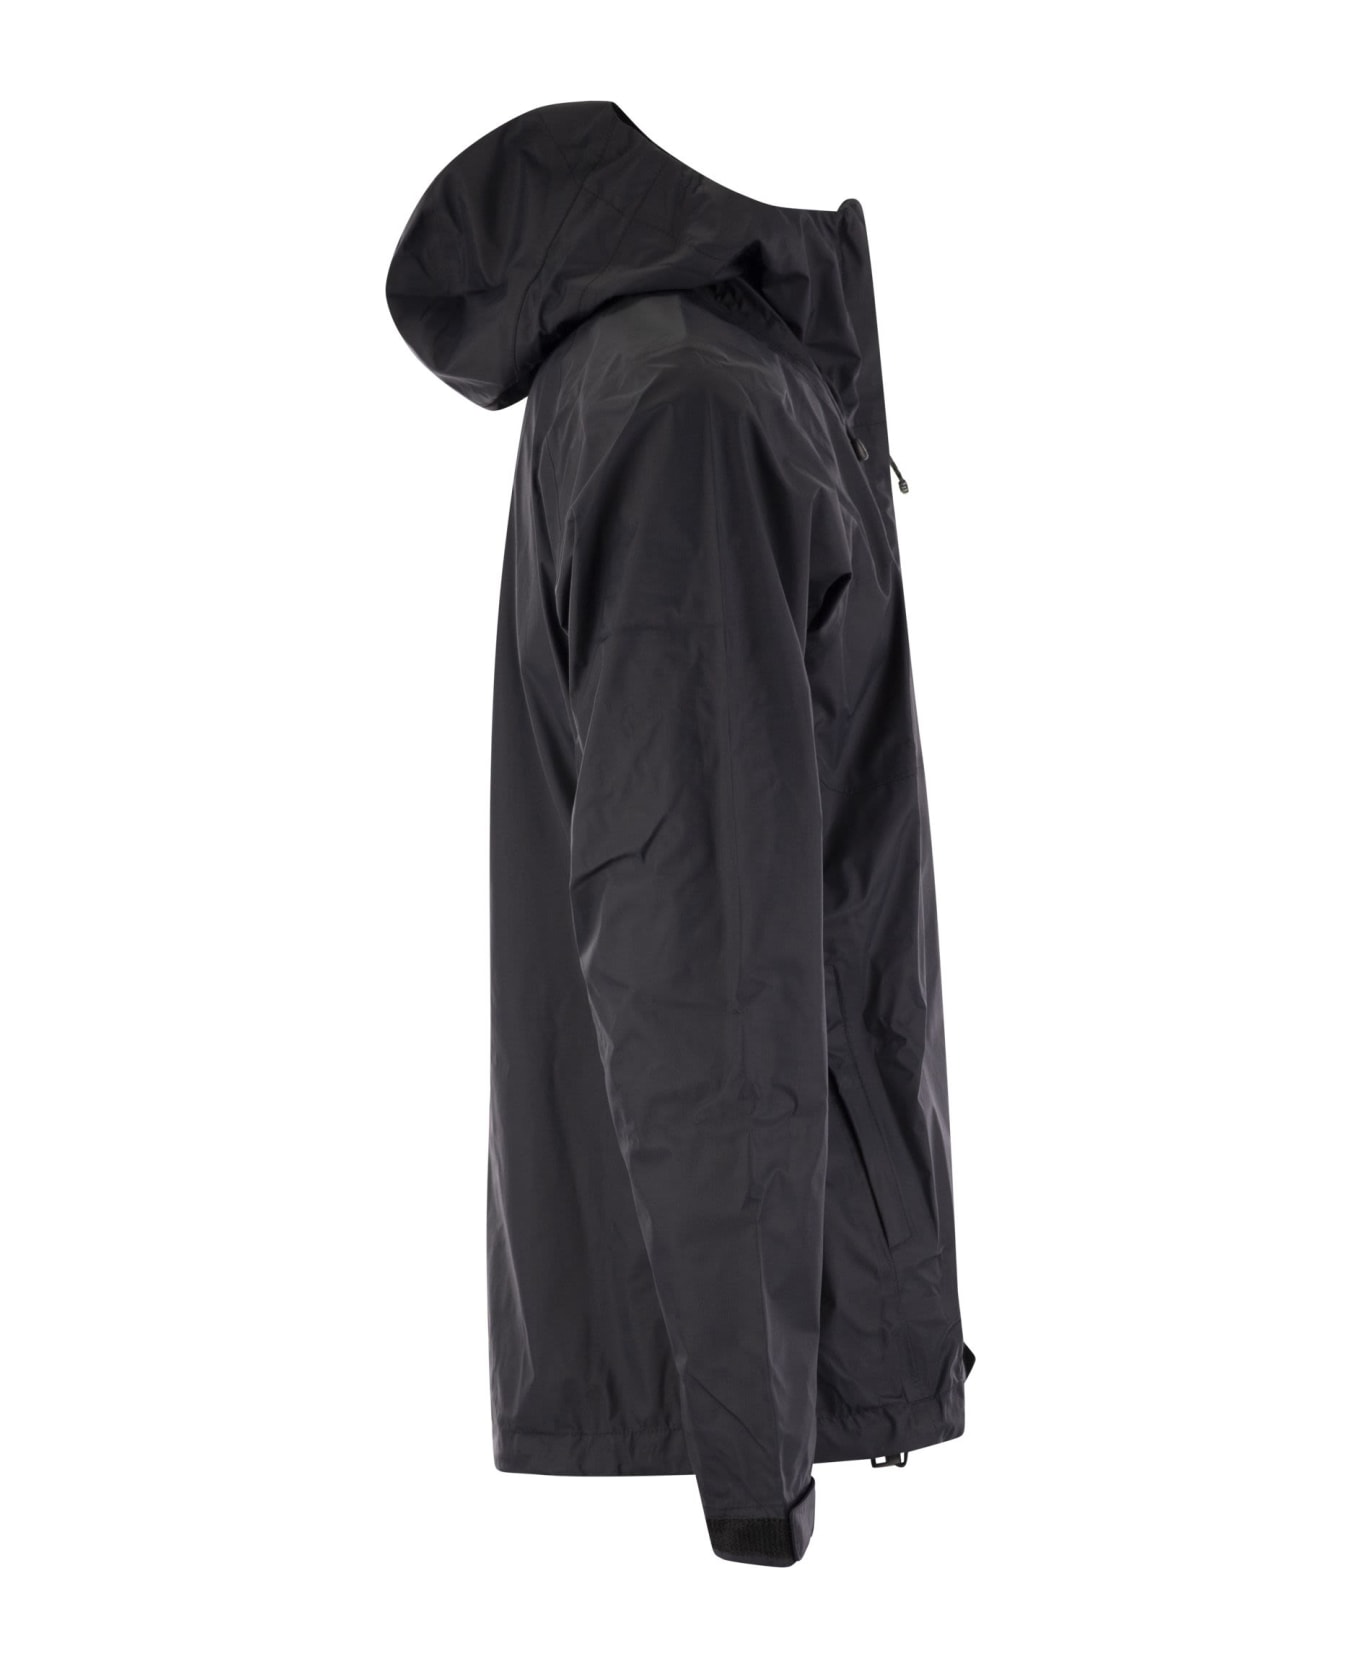 Patagonia Nylon Rainproof Jacket - Black